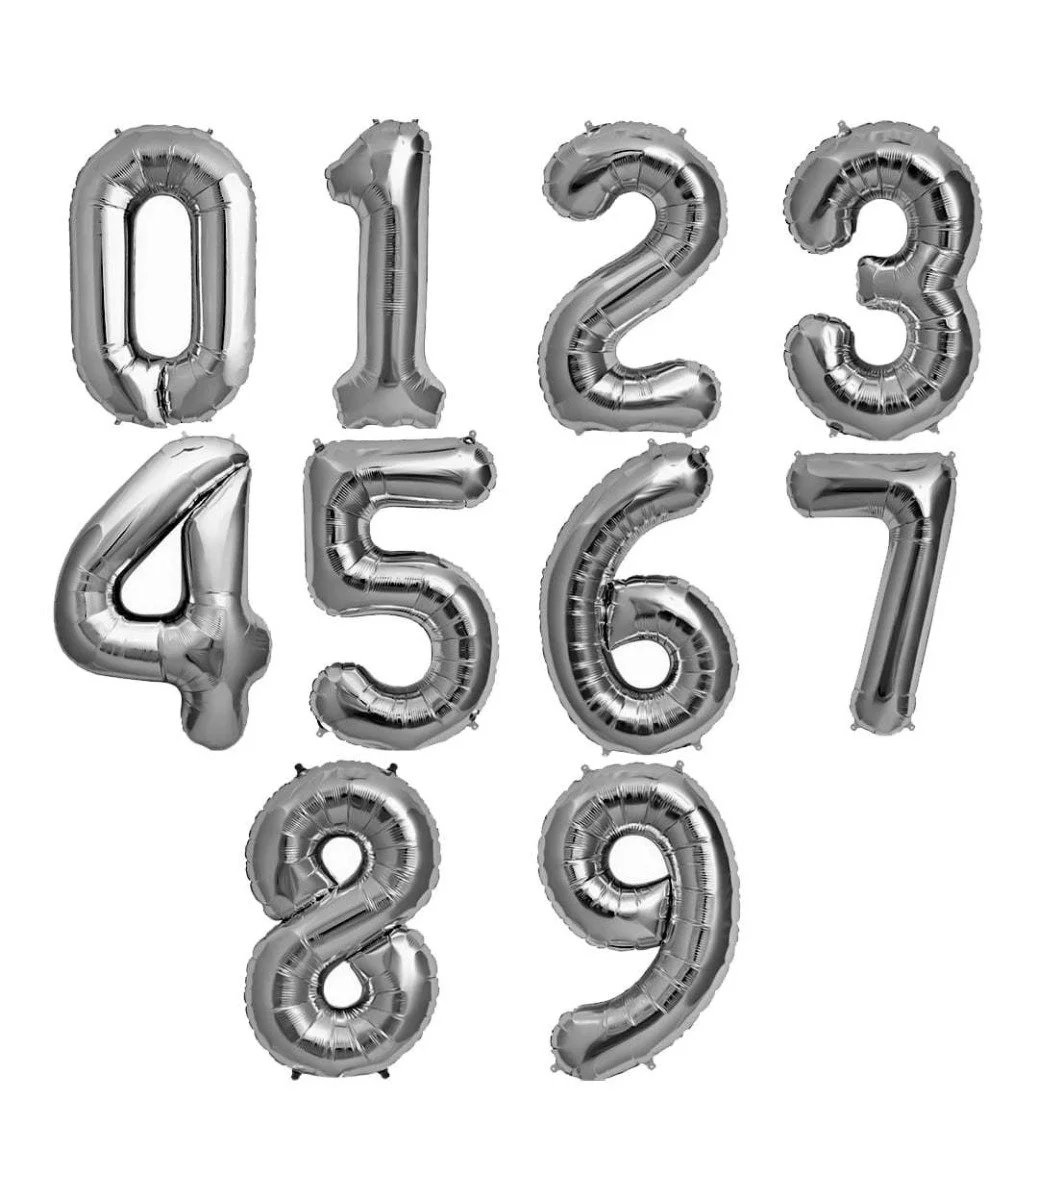 Numeric Balloons 